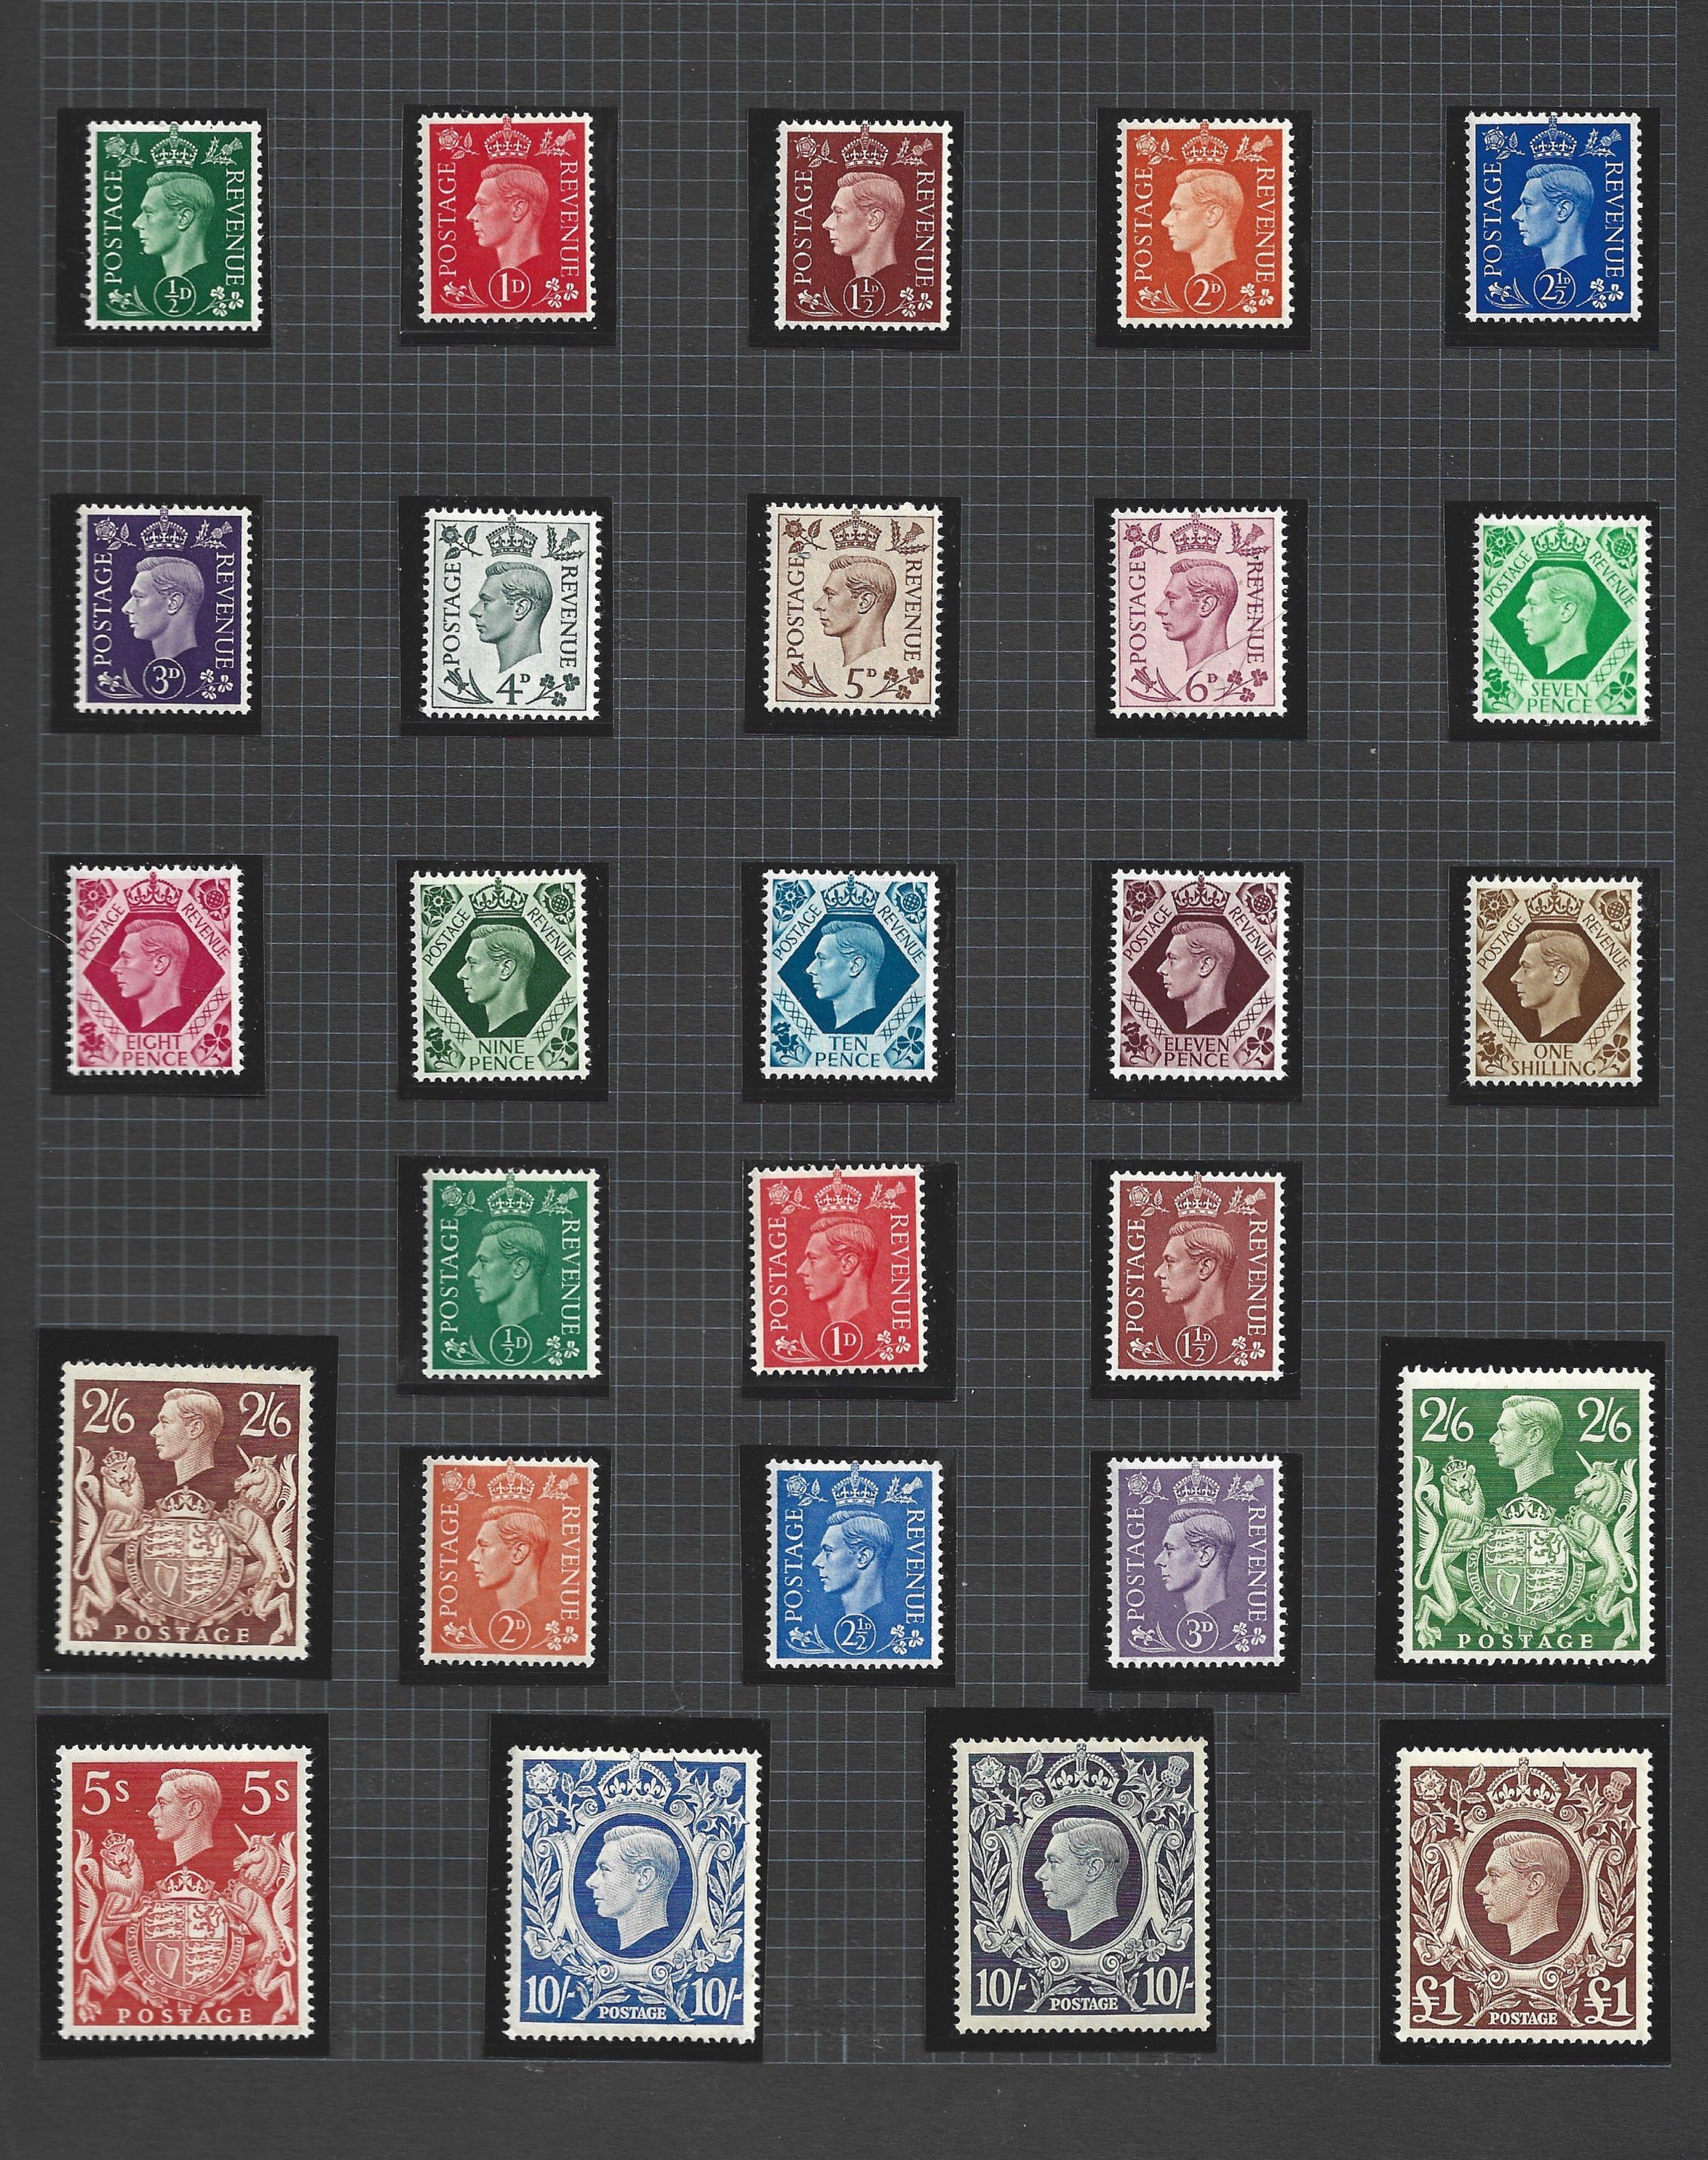 George VI Definitive Stamps.